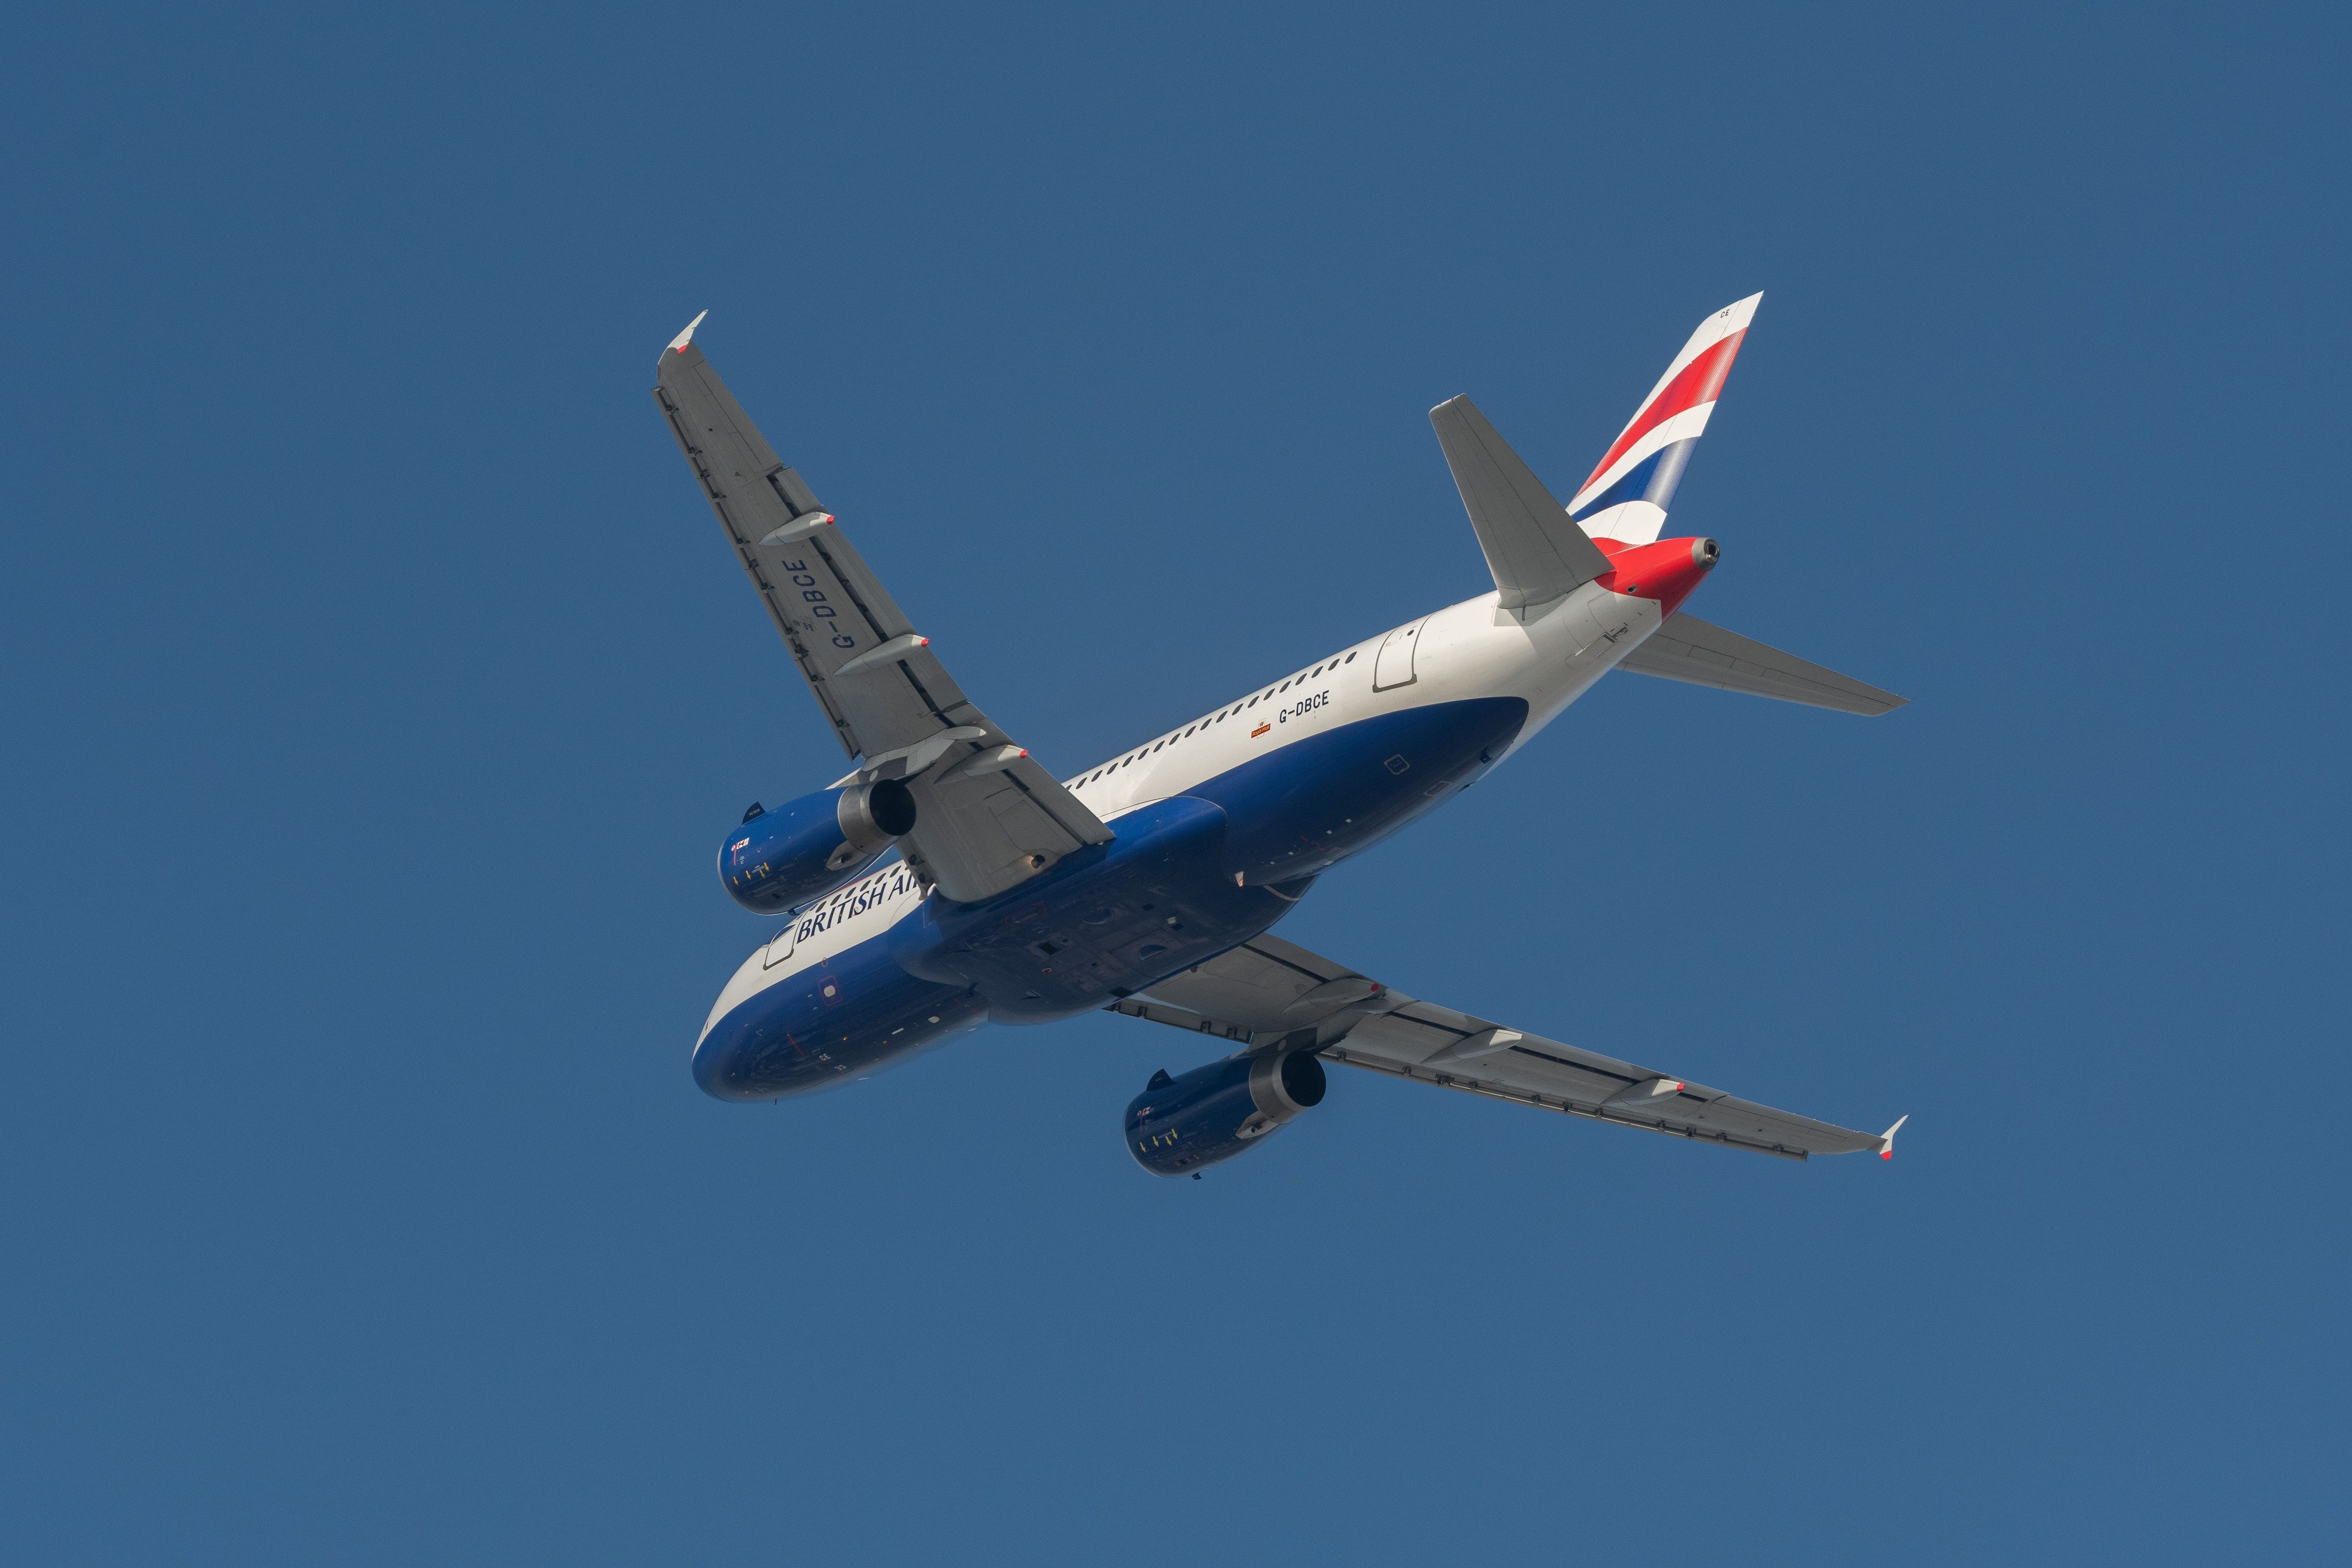 A British Airways Airbus A319 taking off